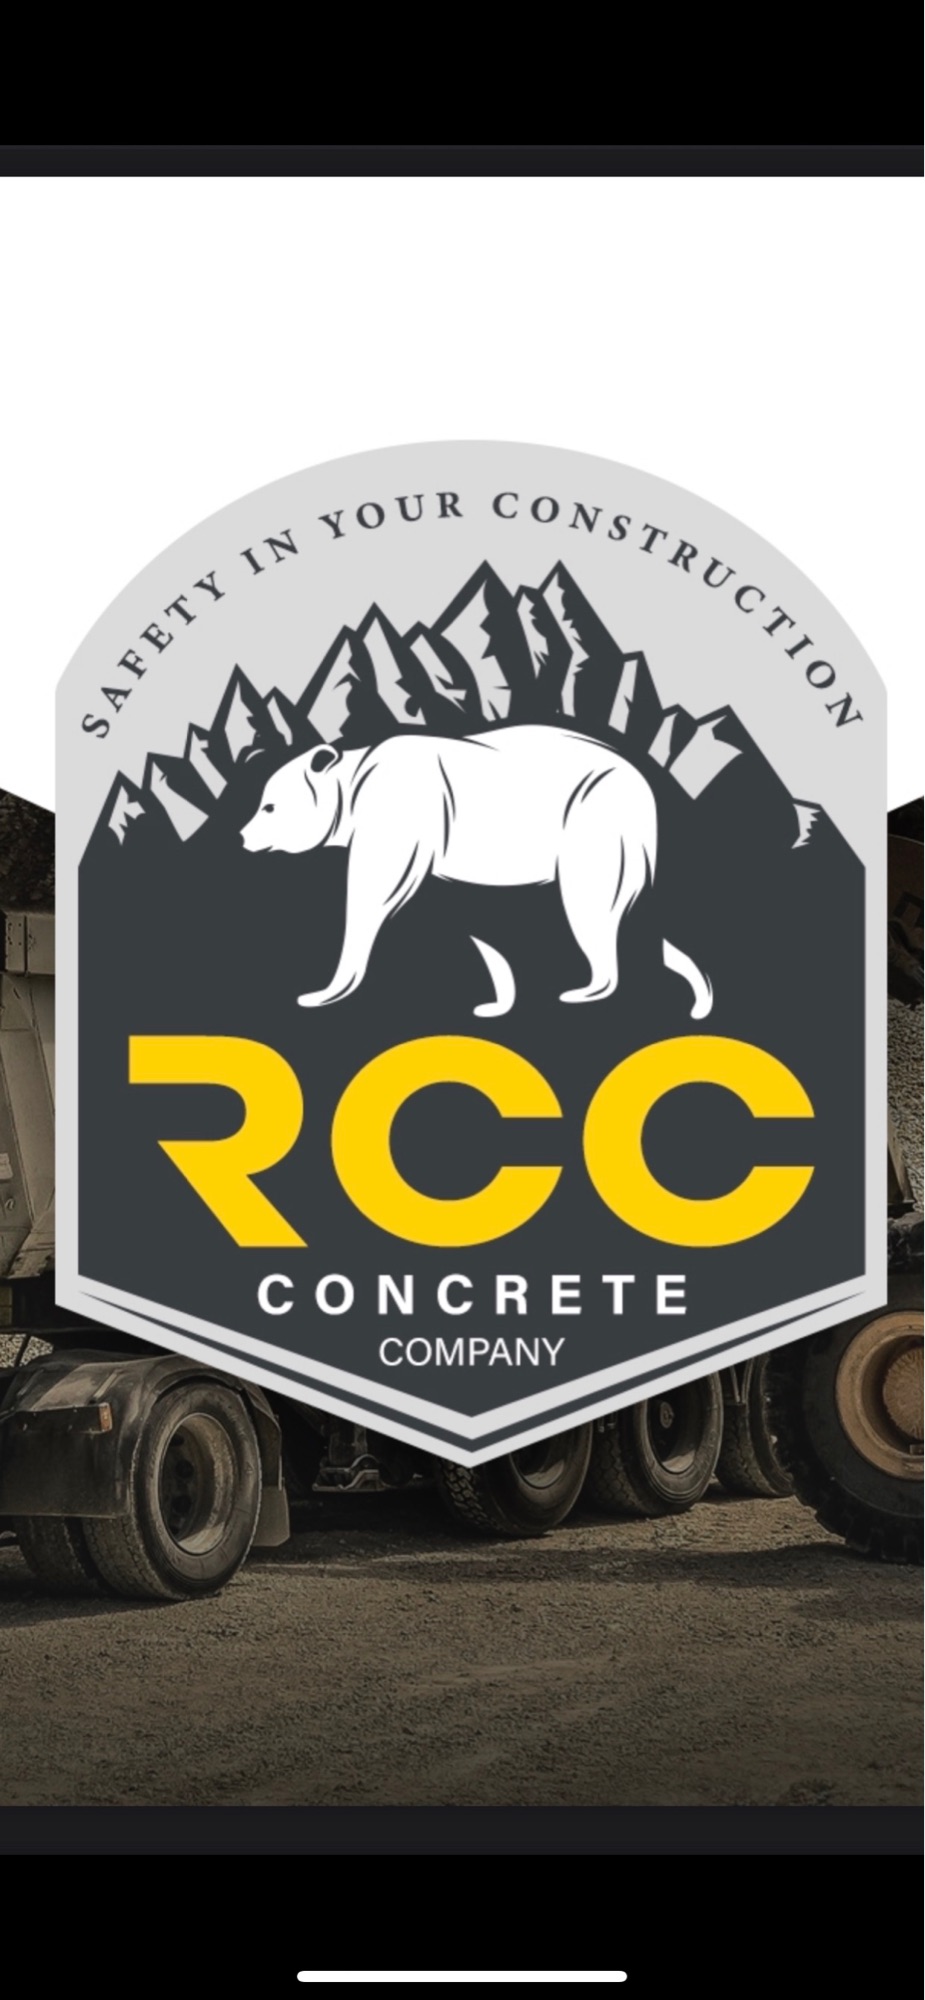 Rodriguez Concrete Construction - Unlicensed Contractor Logo